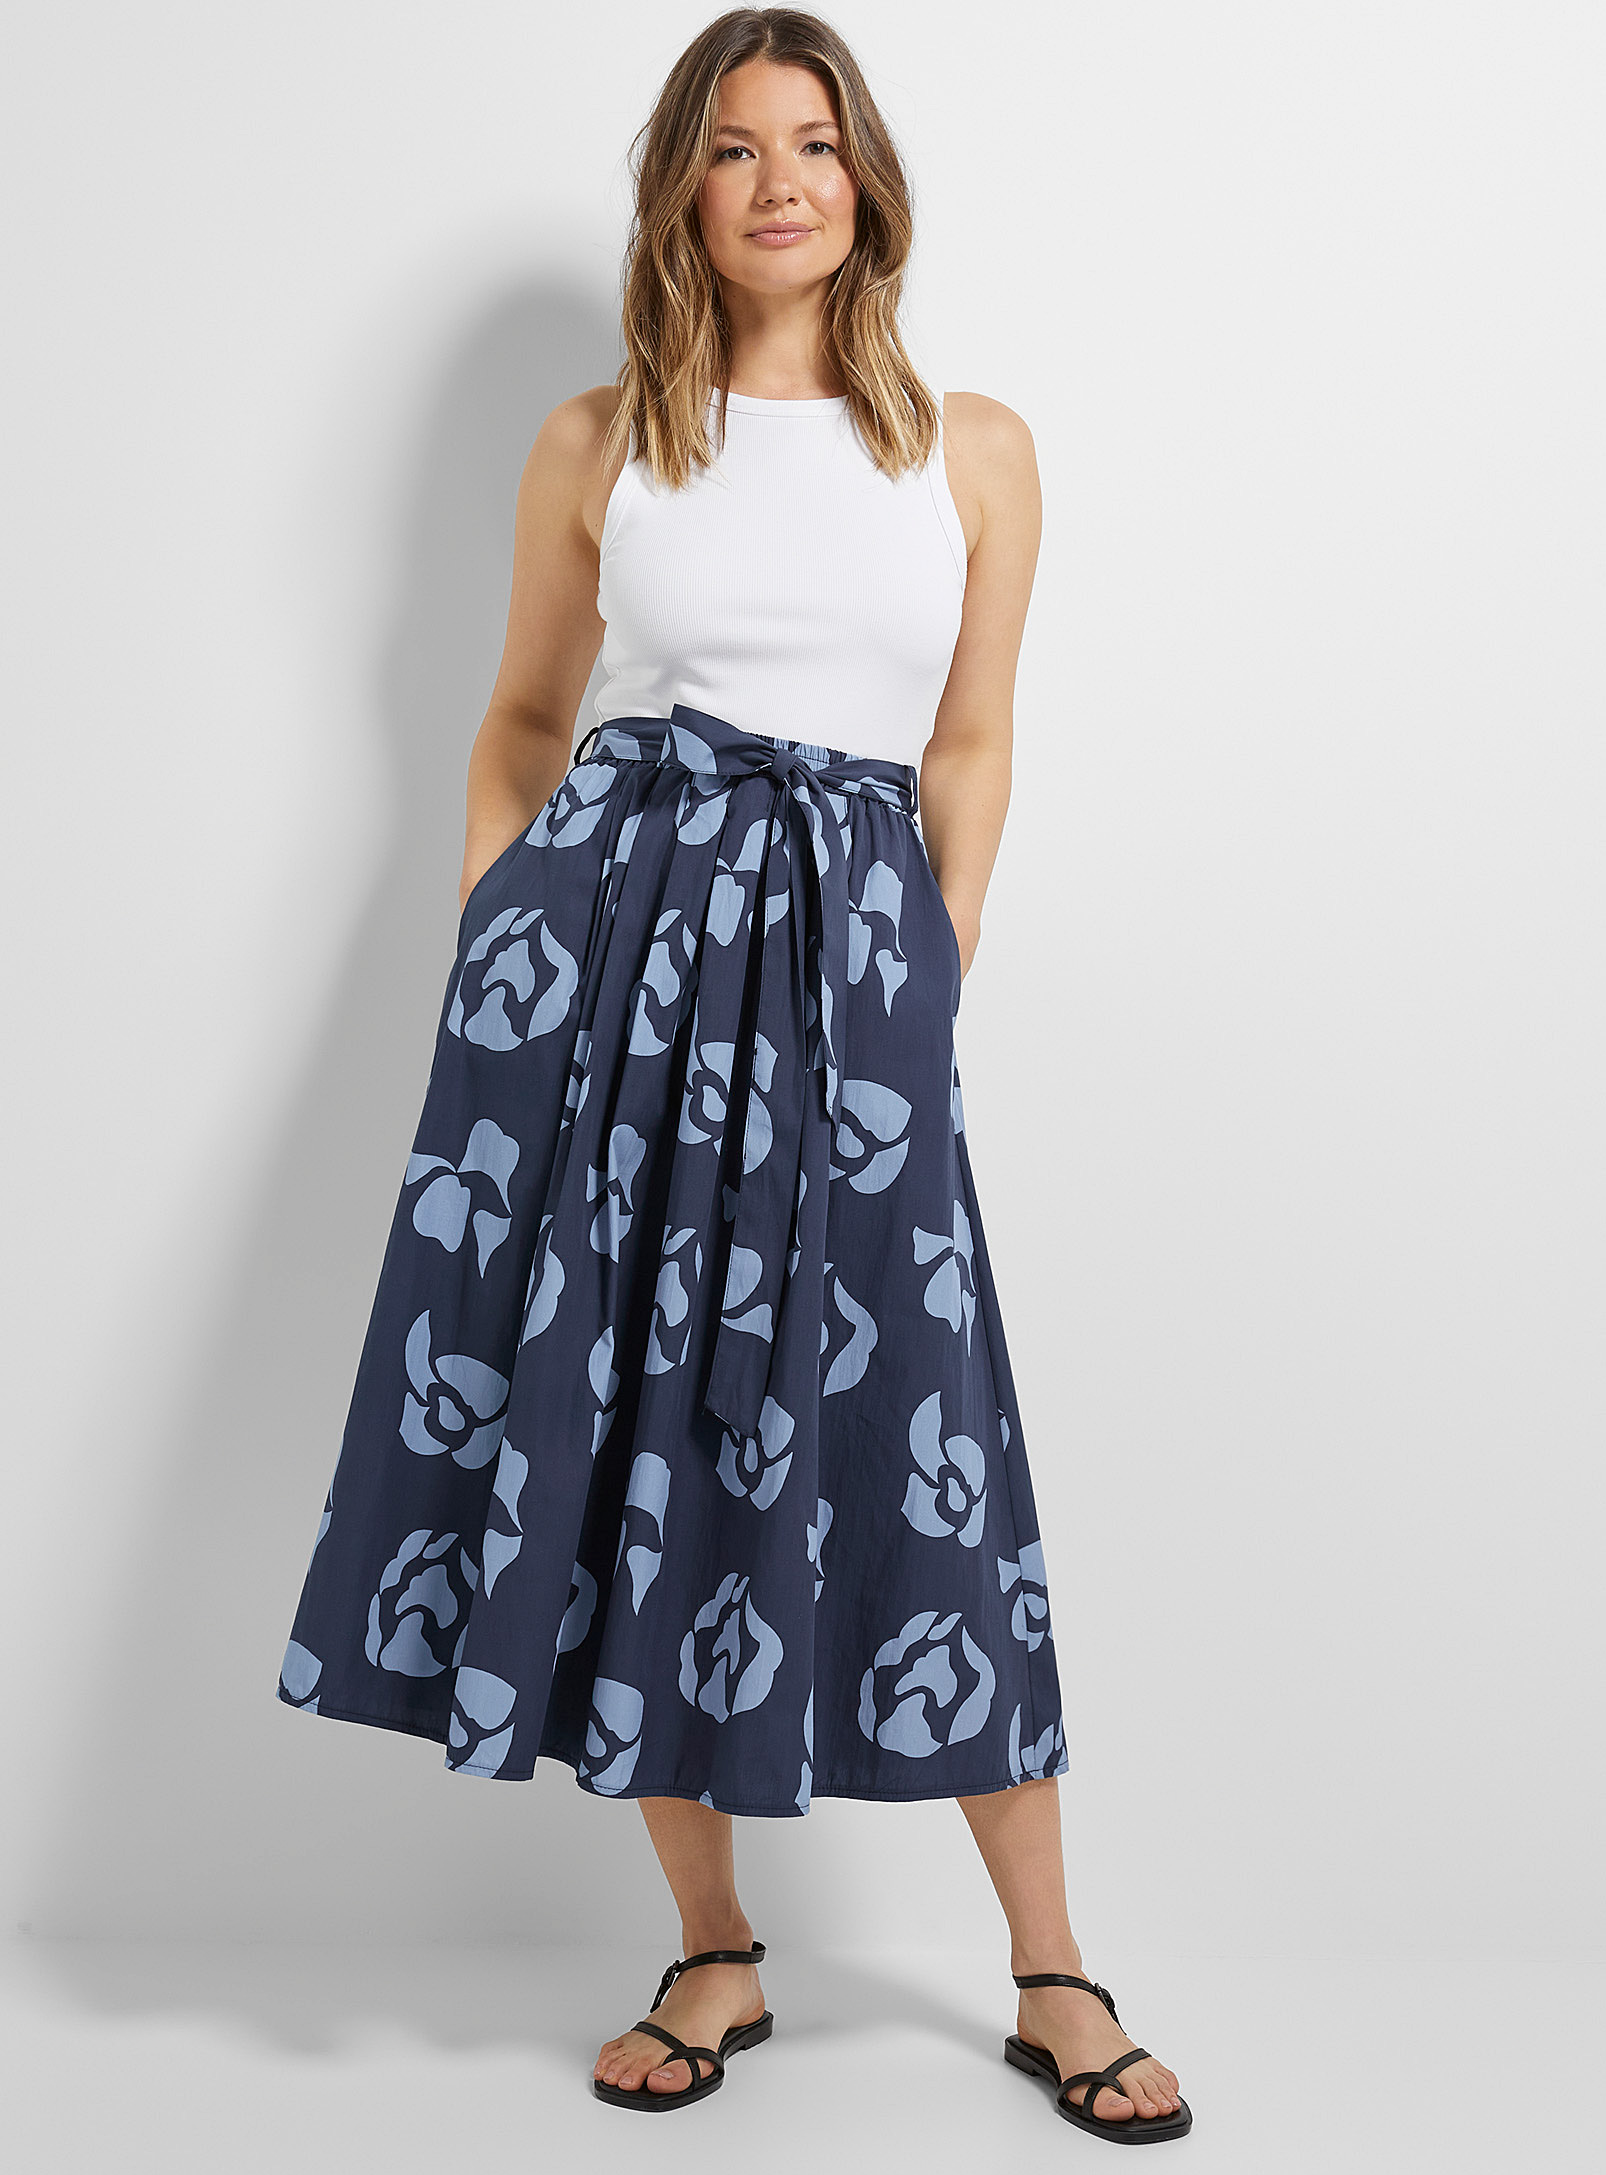 Contemporaine Blue Flowers Tie Waist Skirt In Patterned Blue